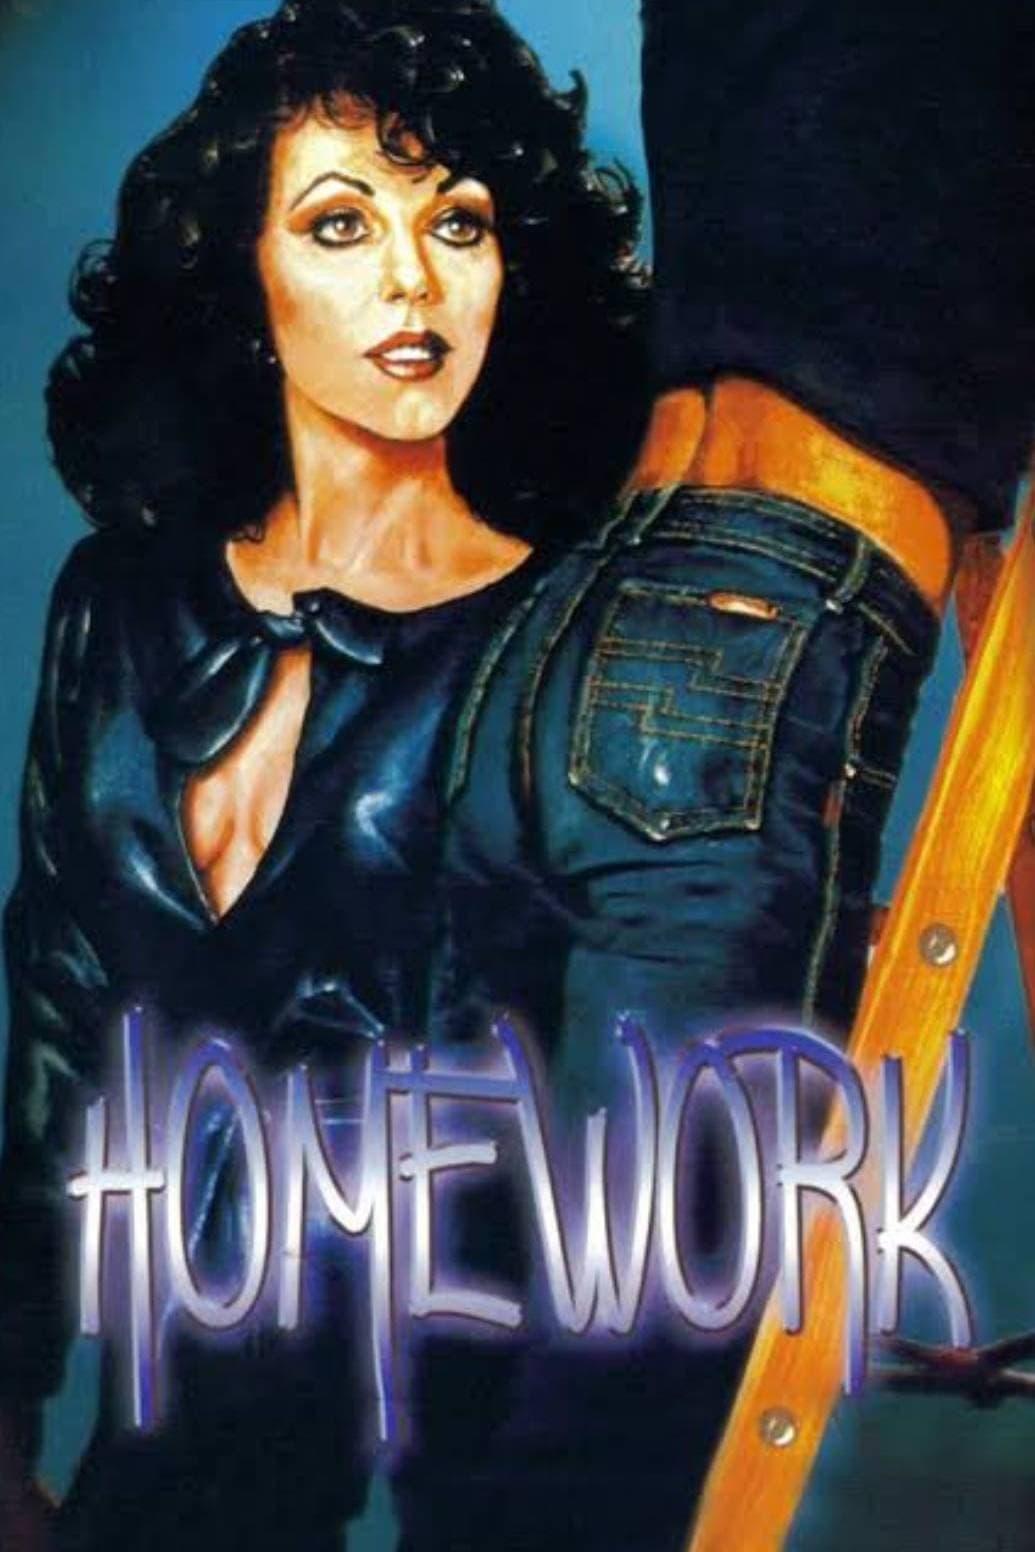 Homework poster